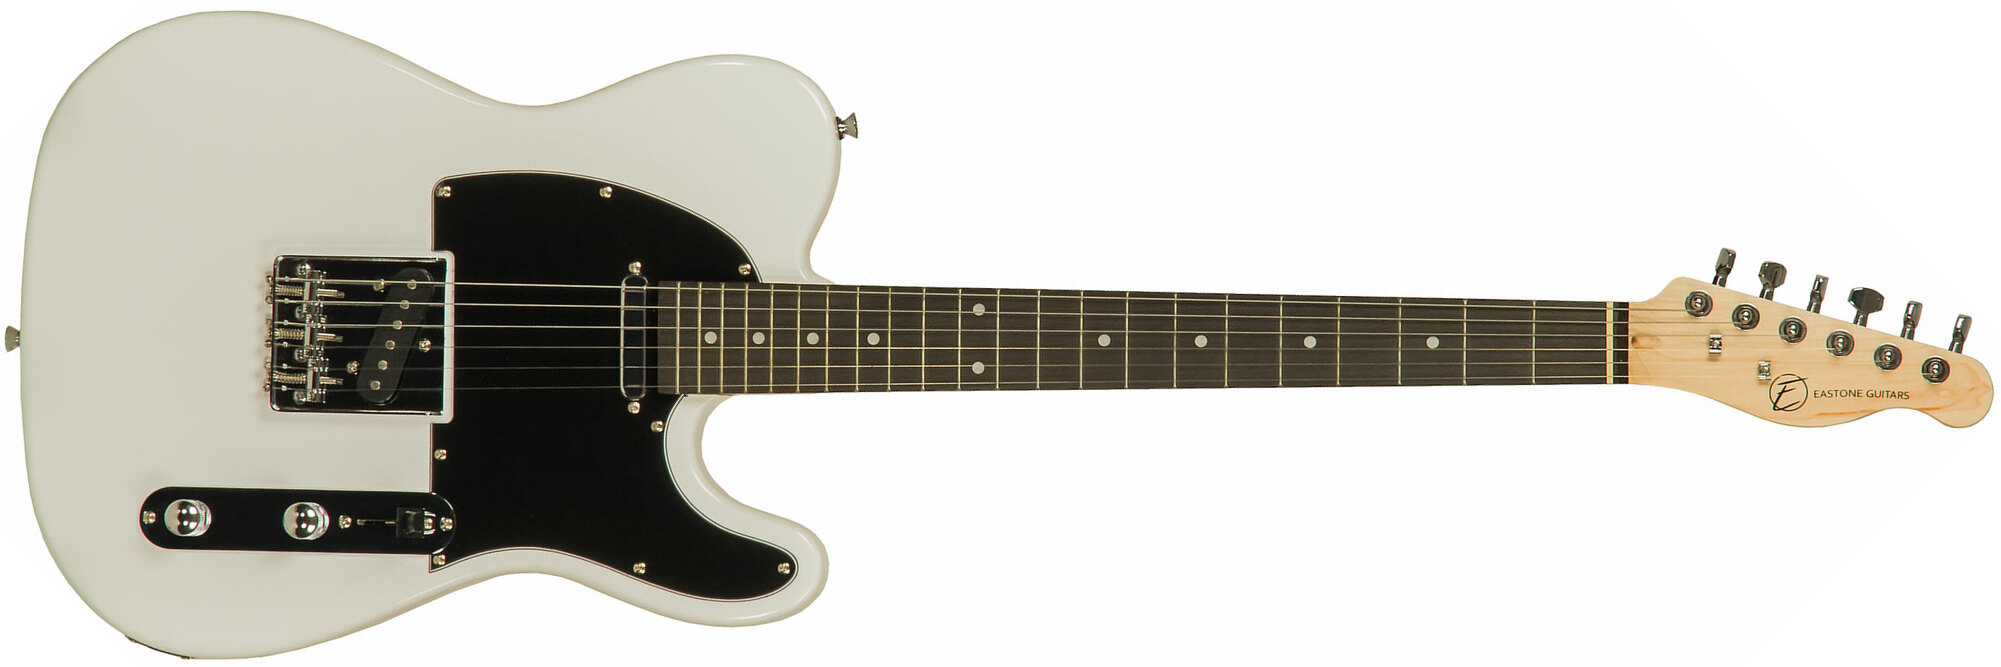 Eastone Tl70 2s Ht Pur - Olympic White - Televorm elektrische gitaar - Main picture